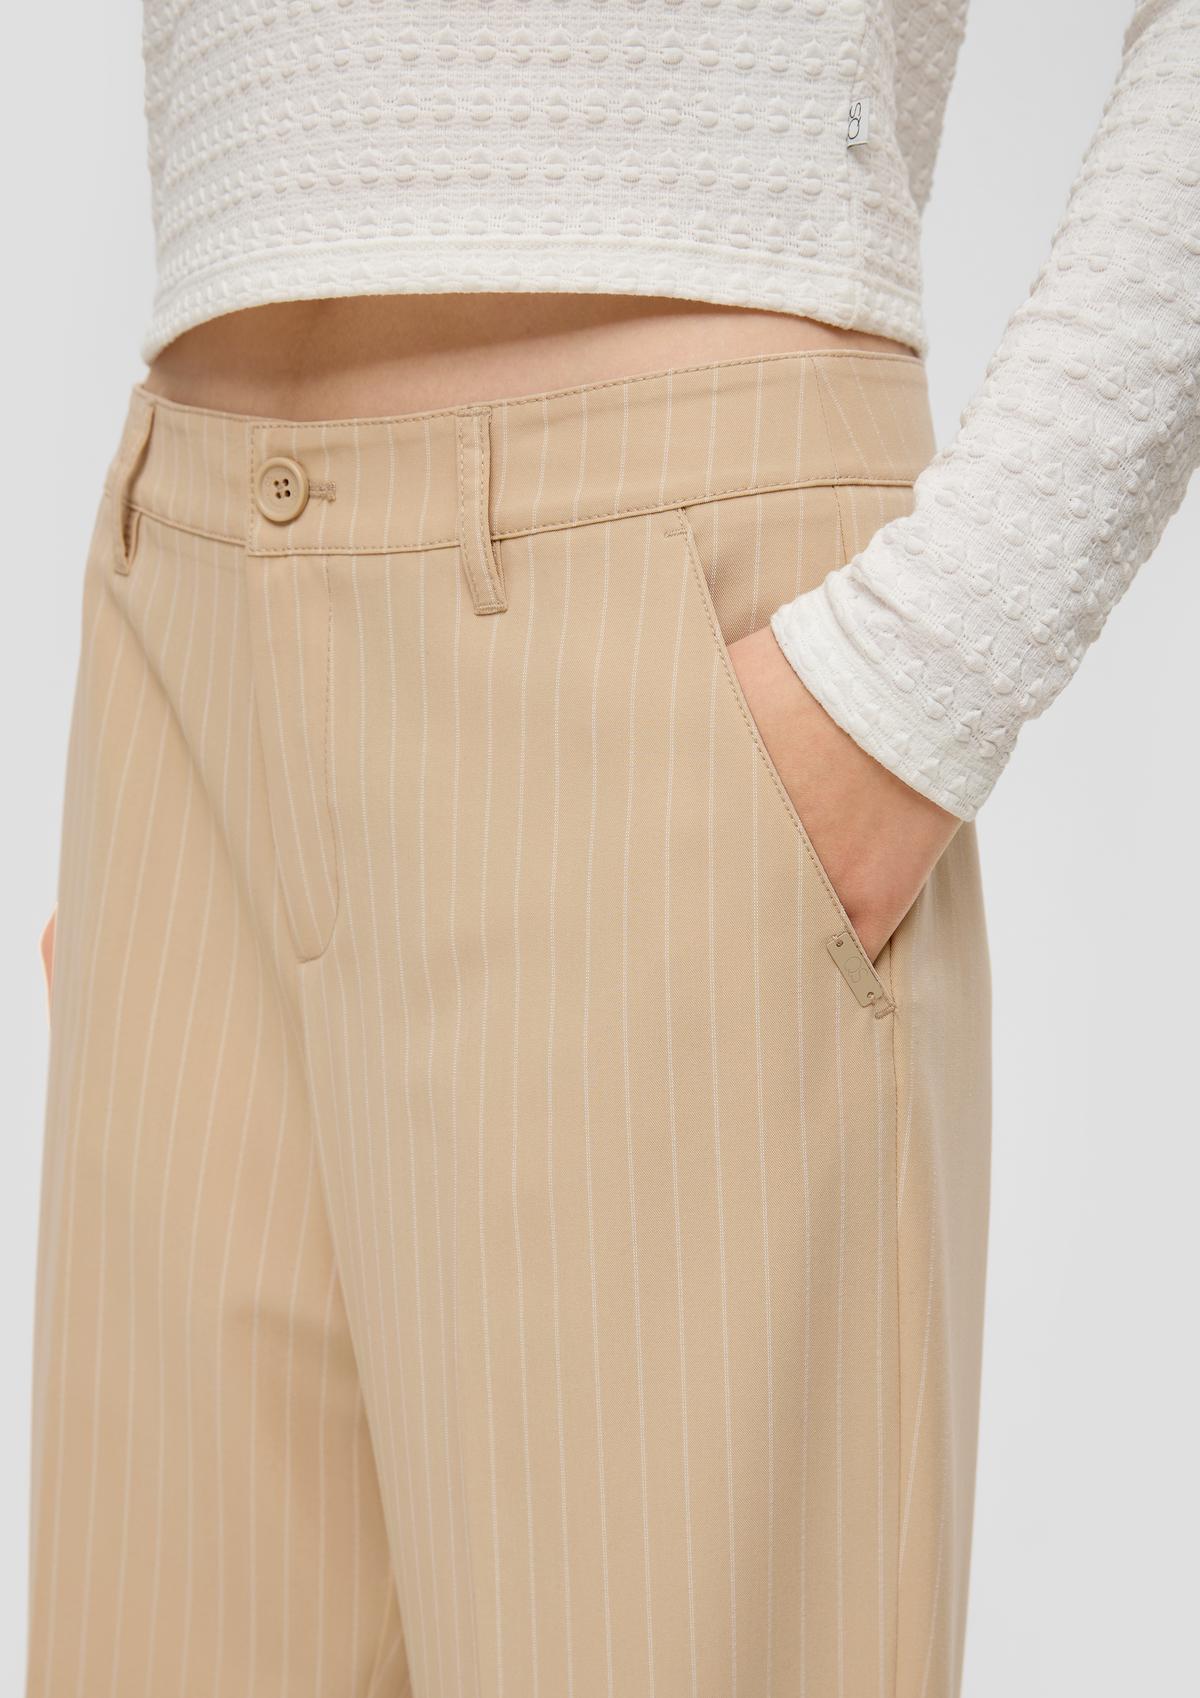 s.Oliver Regular: kalhoty s širokými nohavicemi, s vlasovým proužkem